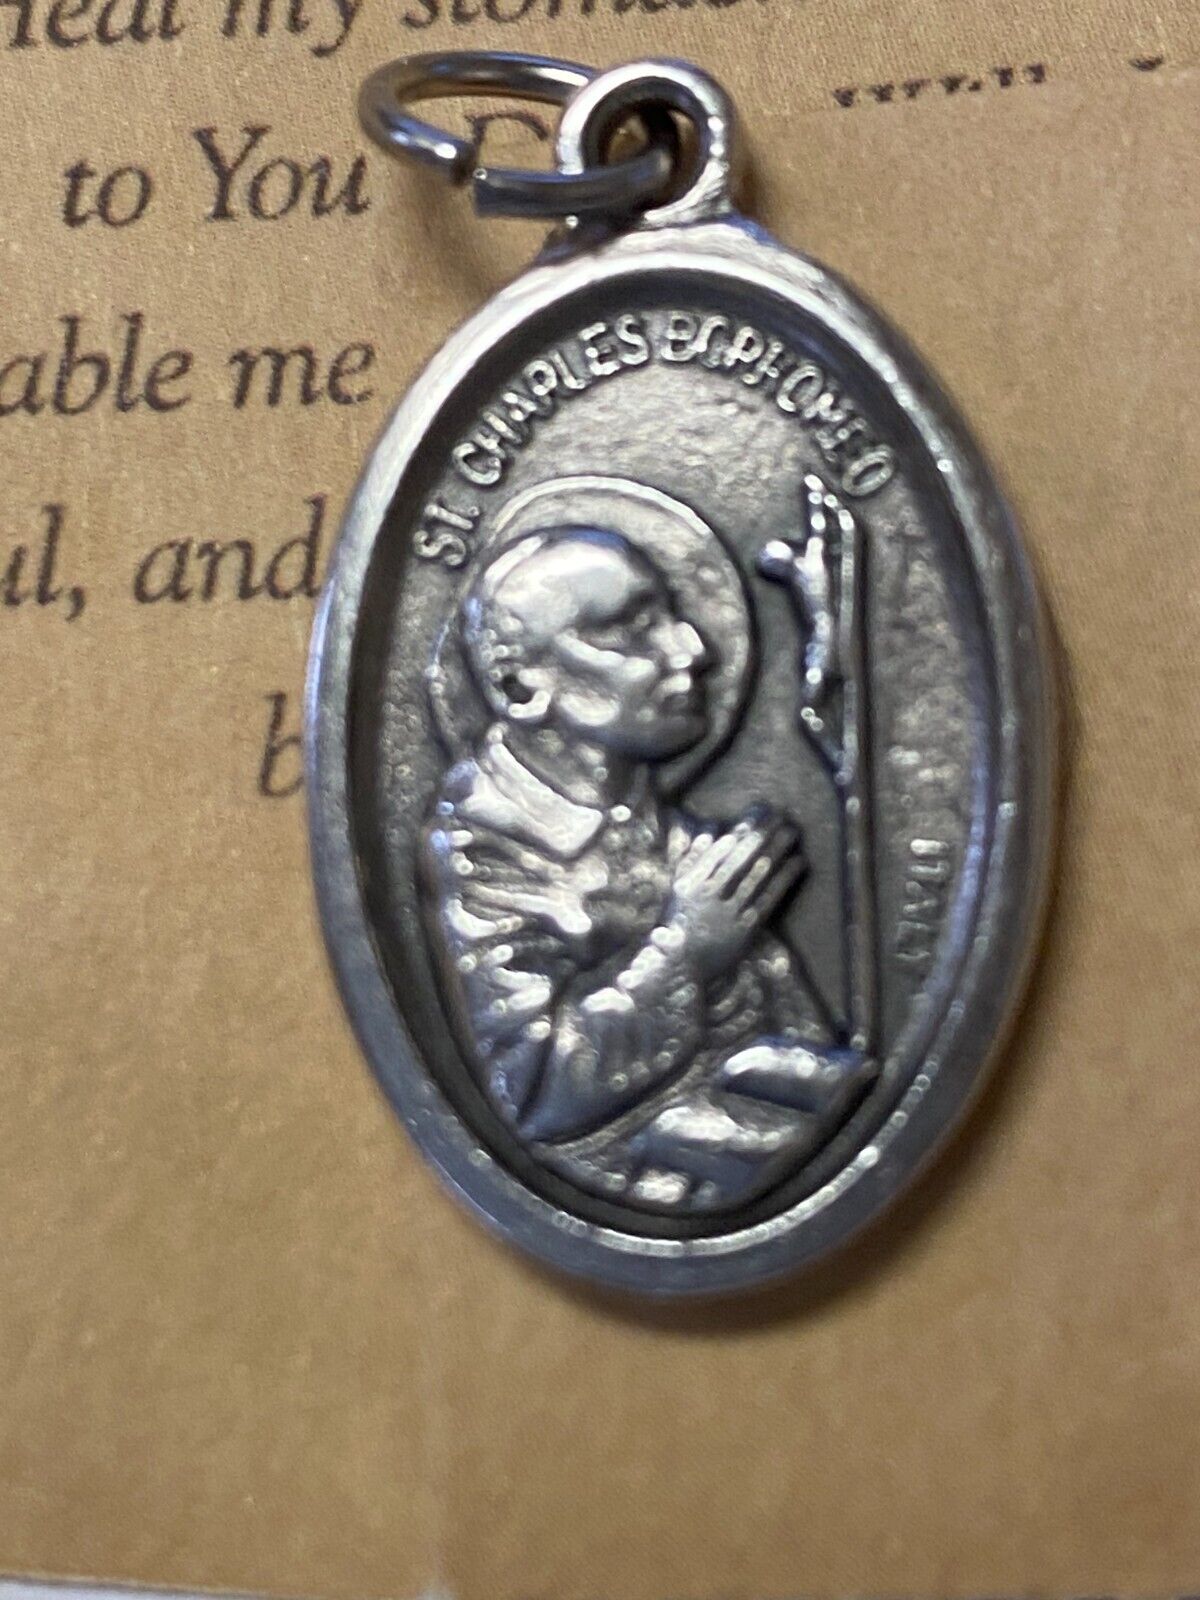 Saint Charles Borromeo, Prayer Card & Medal, New - Bob and Penny Lord